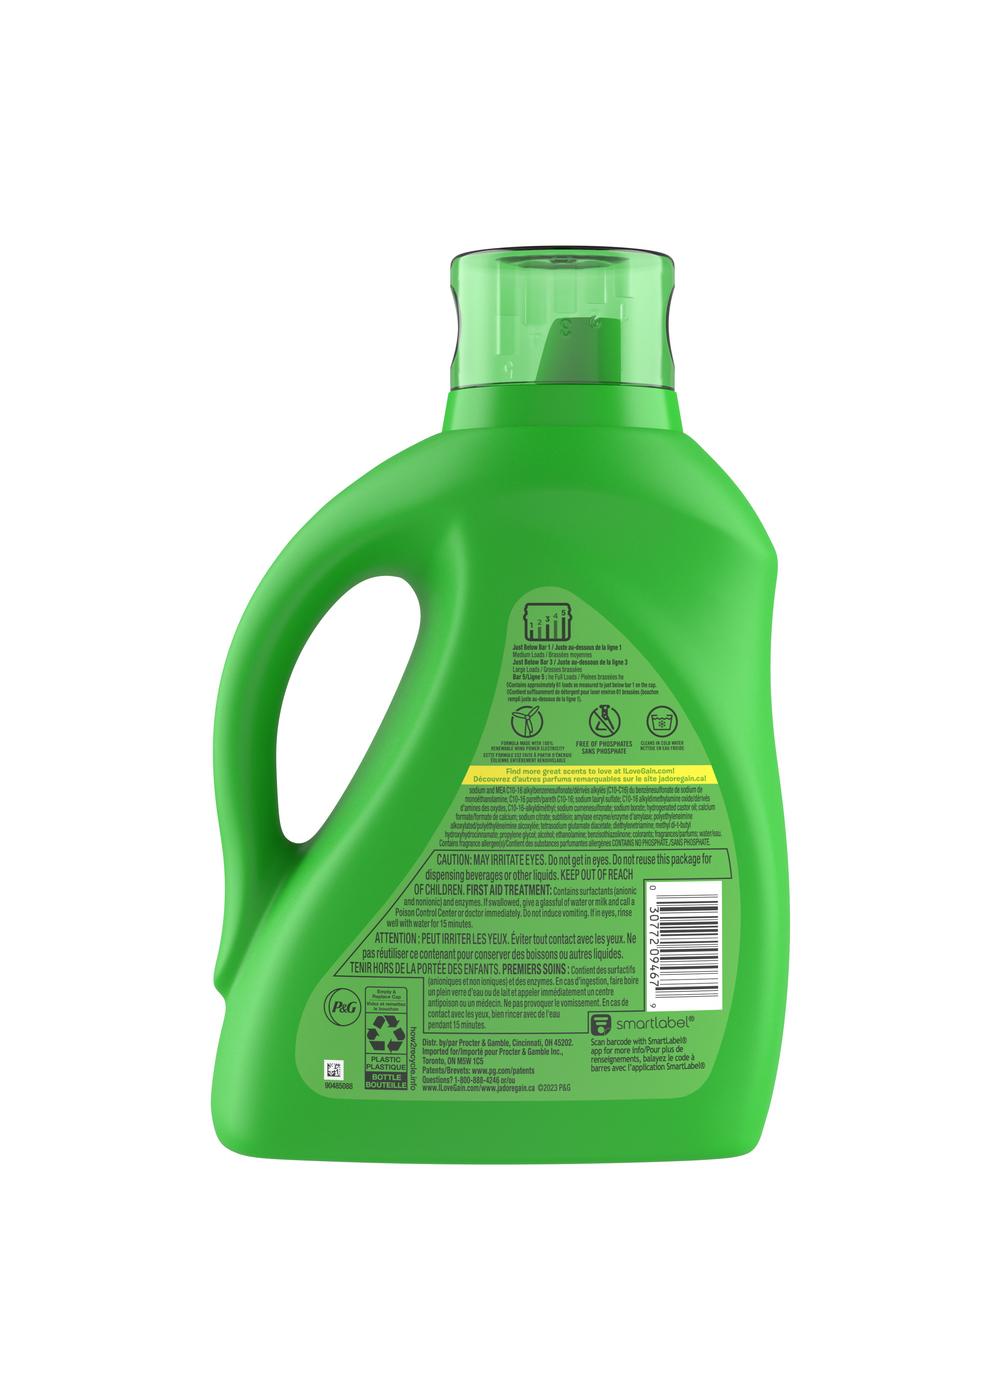 Gain + Odor Defense HE Liquid Laundry Detergent, 61 Loads - Super Fresh Blast; image 10 of 10